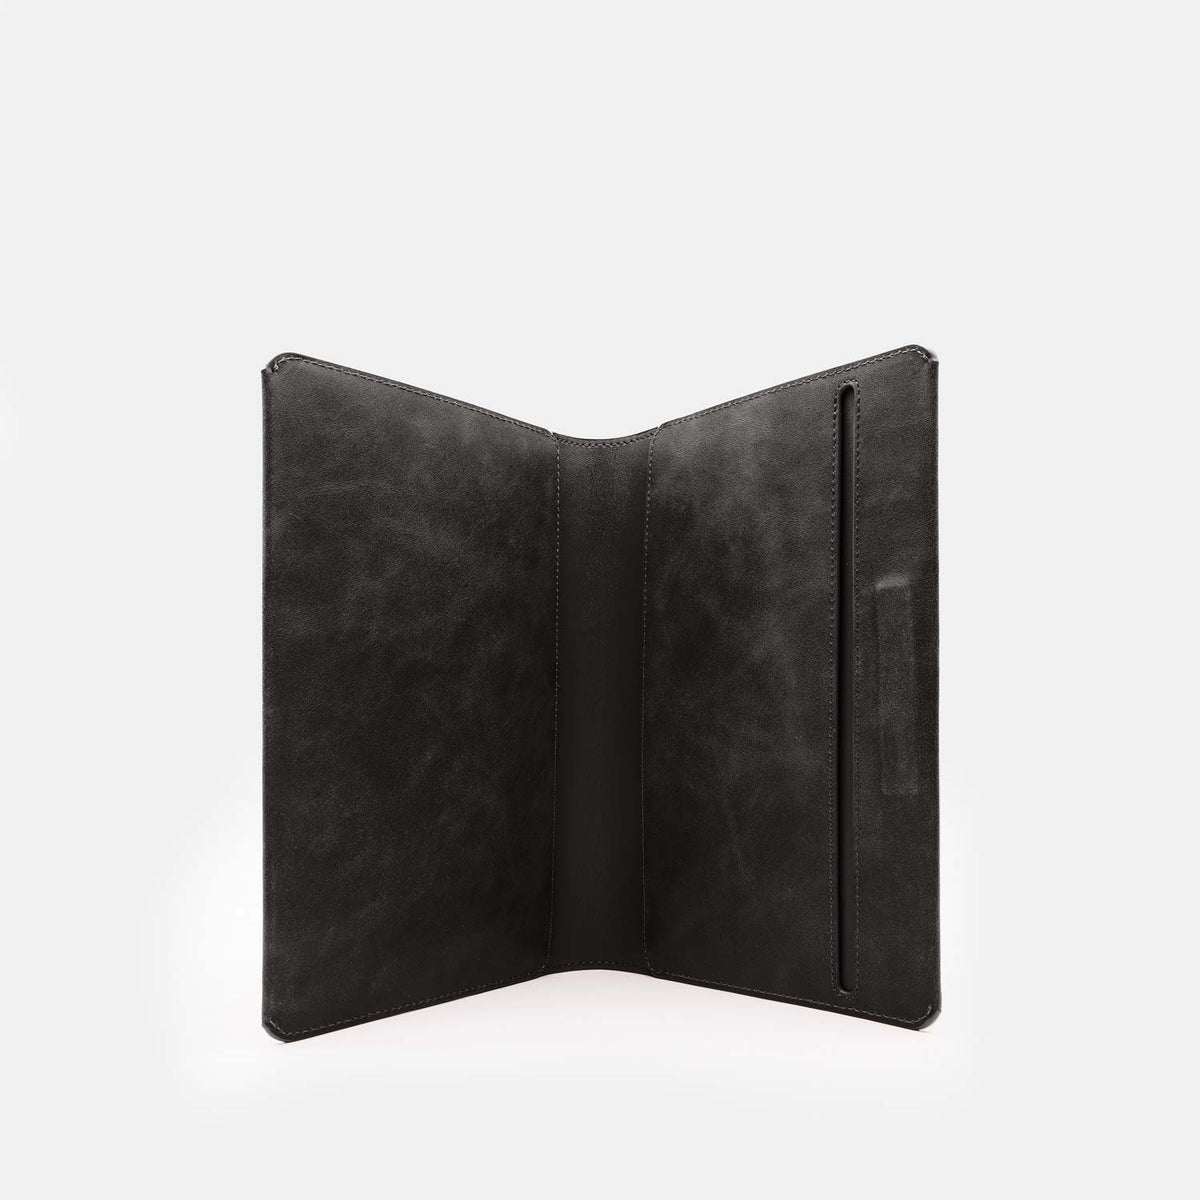 Moleskine Notebook Cover - Black - RYAN London